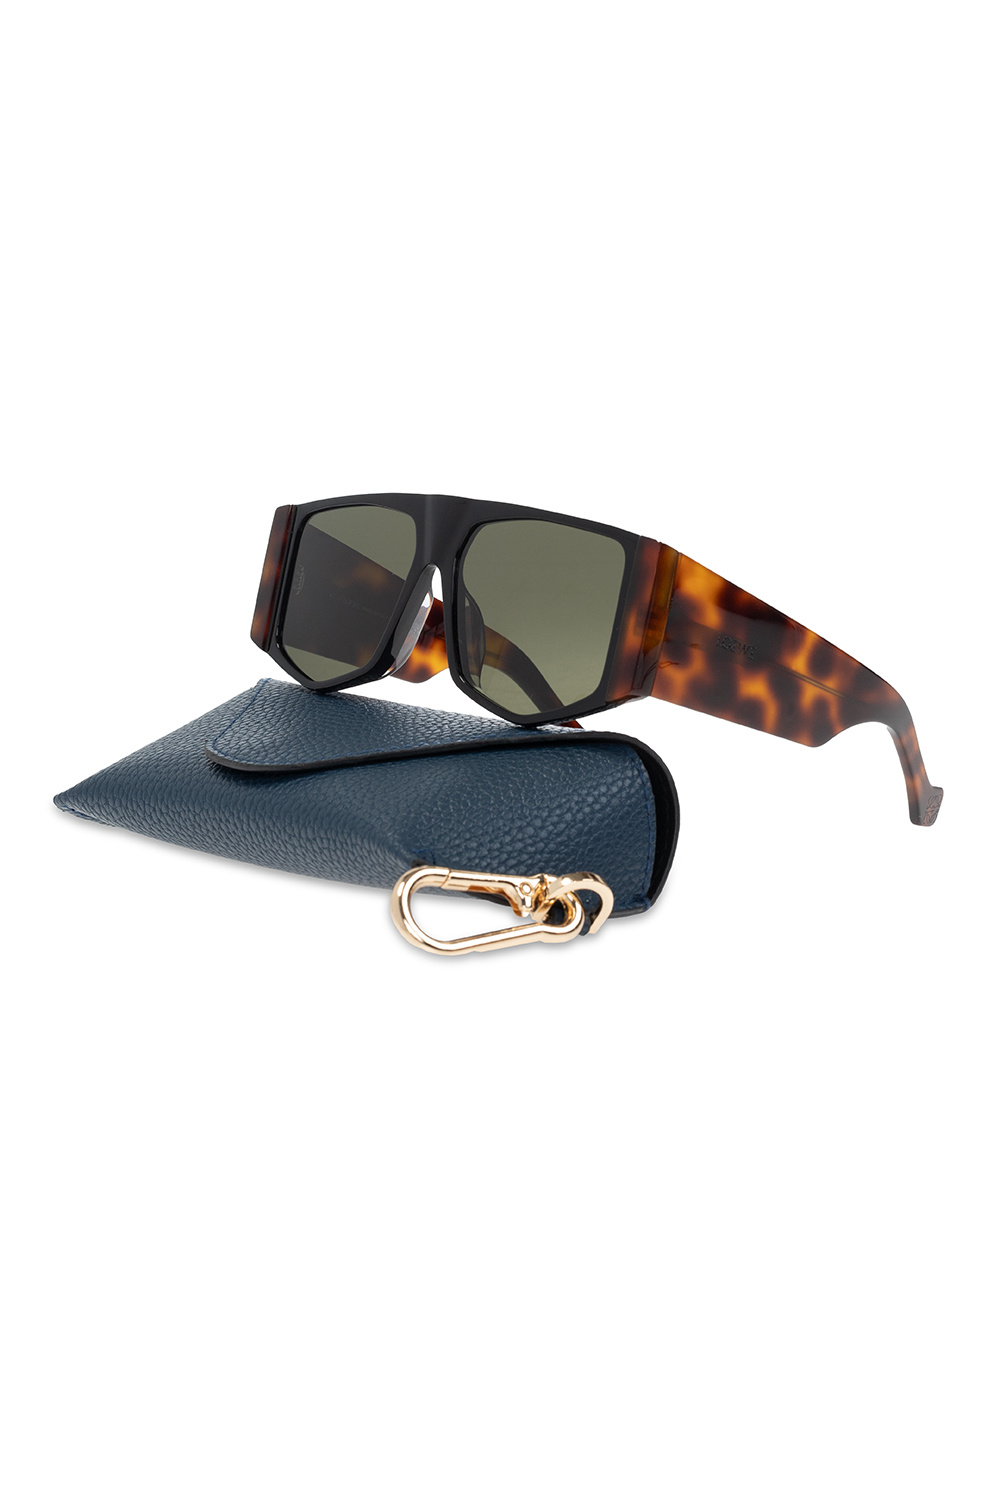 IetpShops, Ray-Ban Polarized Aviator Sunglasses, Women's Accessories